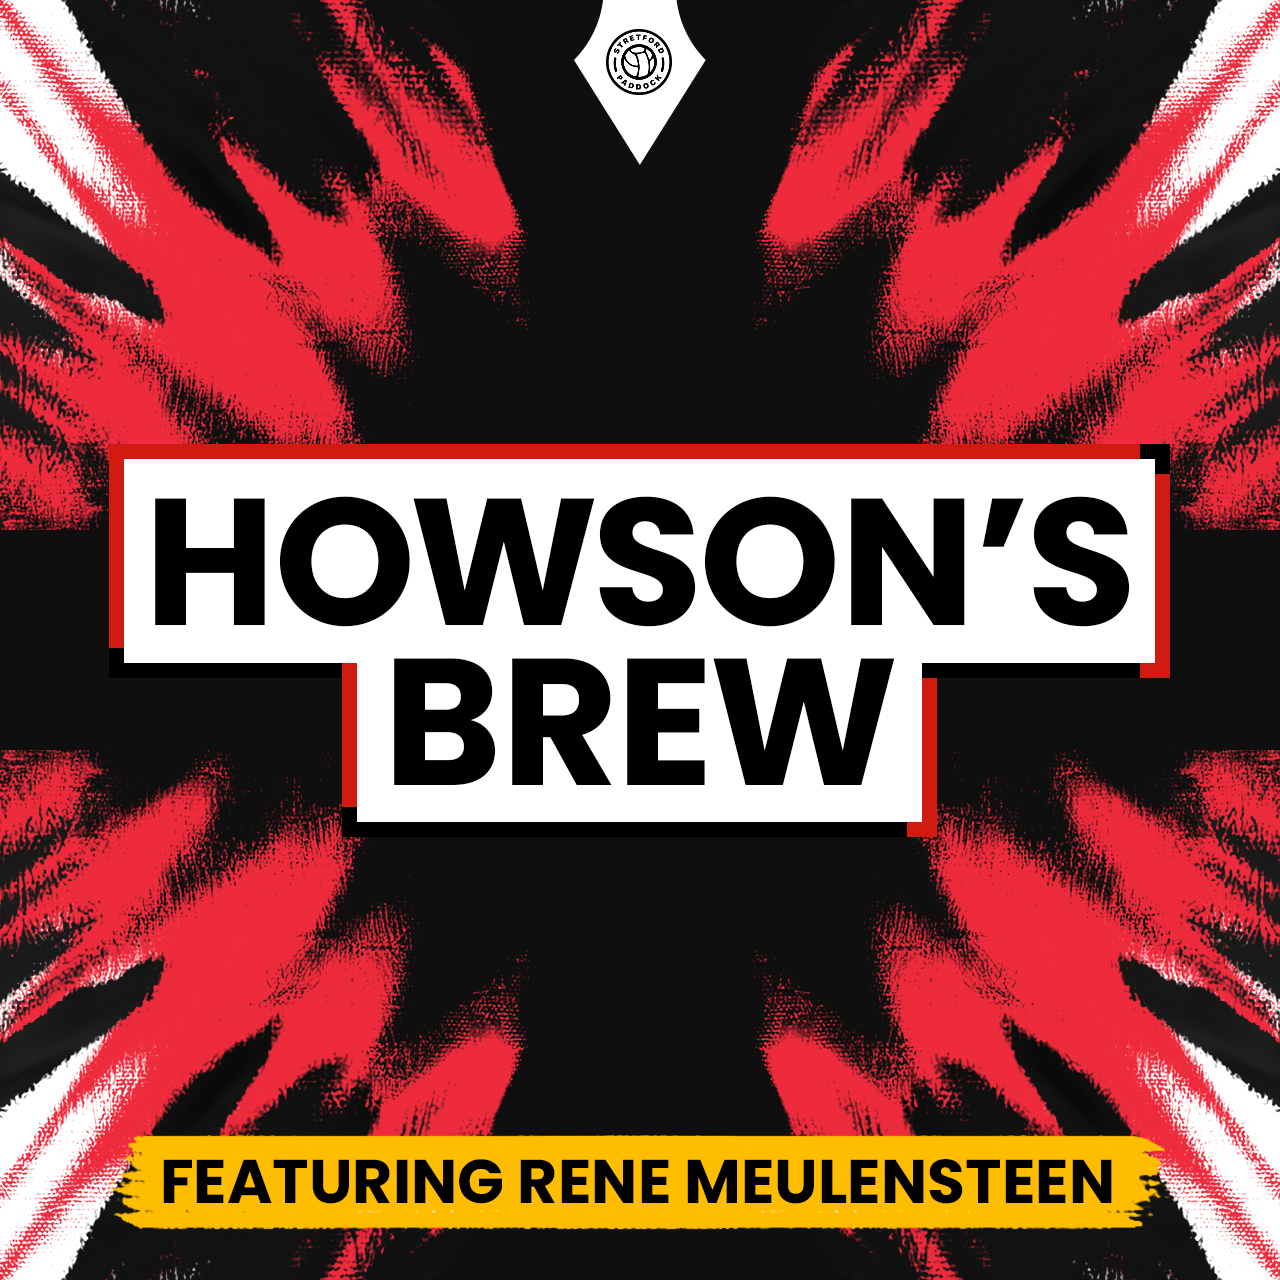 Man Utd And Methods Of Success | Rene Meulensteen Q&A | Howson's Brew